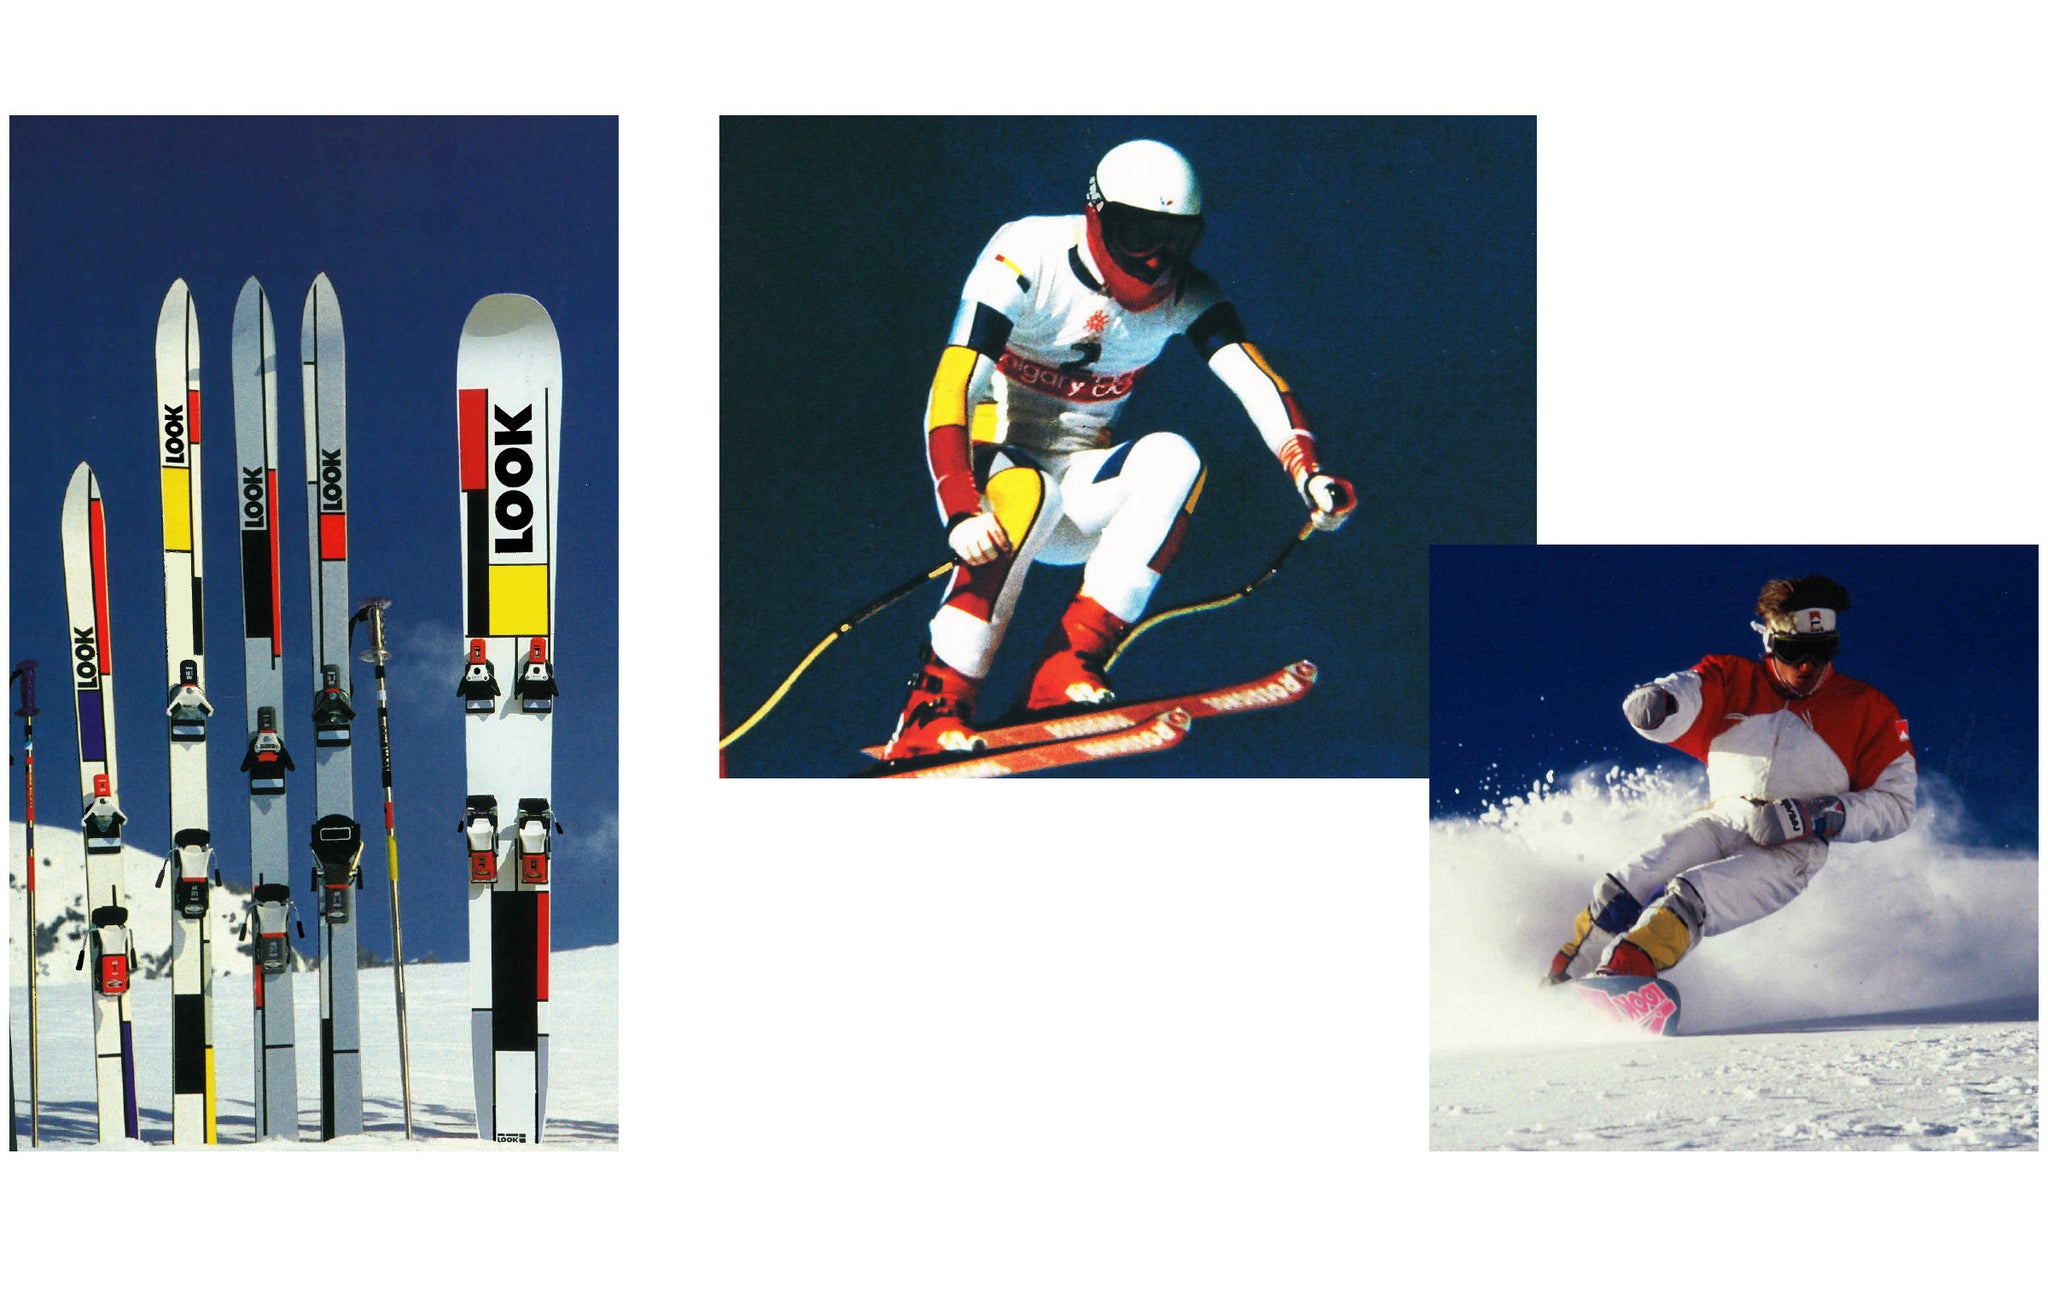 LOOK Ski equipment Mondrian